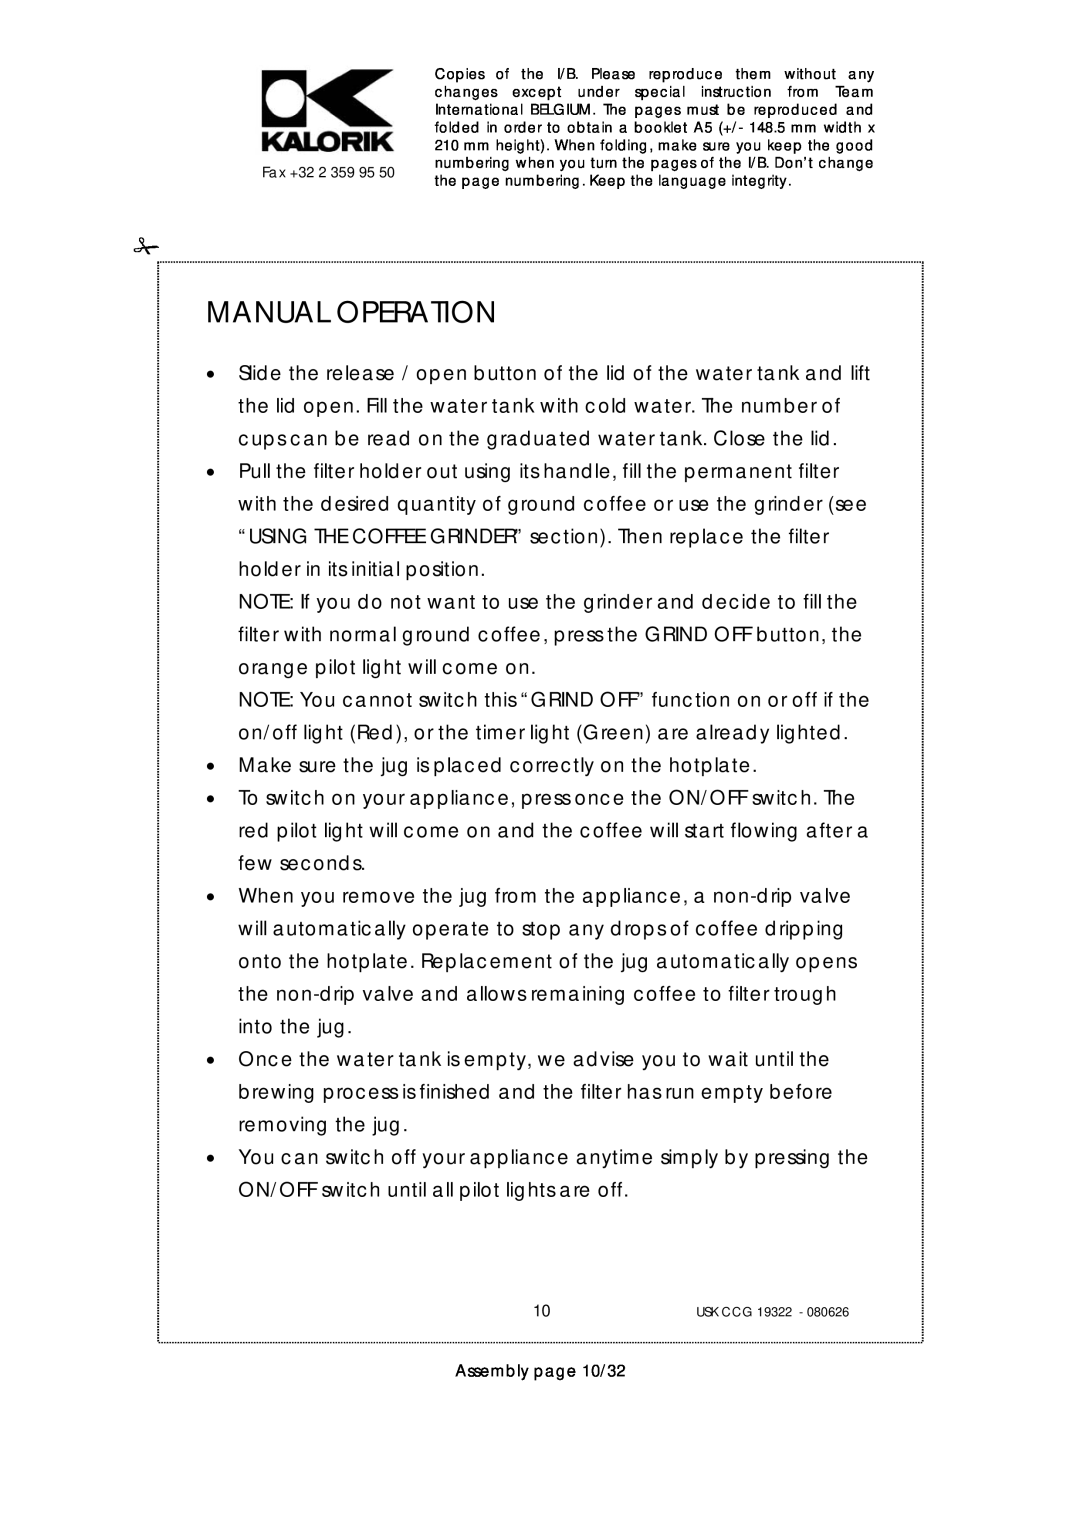 Kalorik USK CCG080626, USK CCG 19322 manual Manual Operation, Assembly page 10/32 